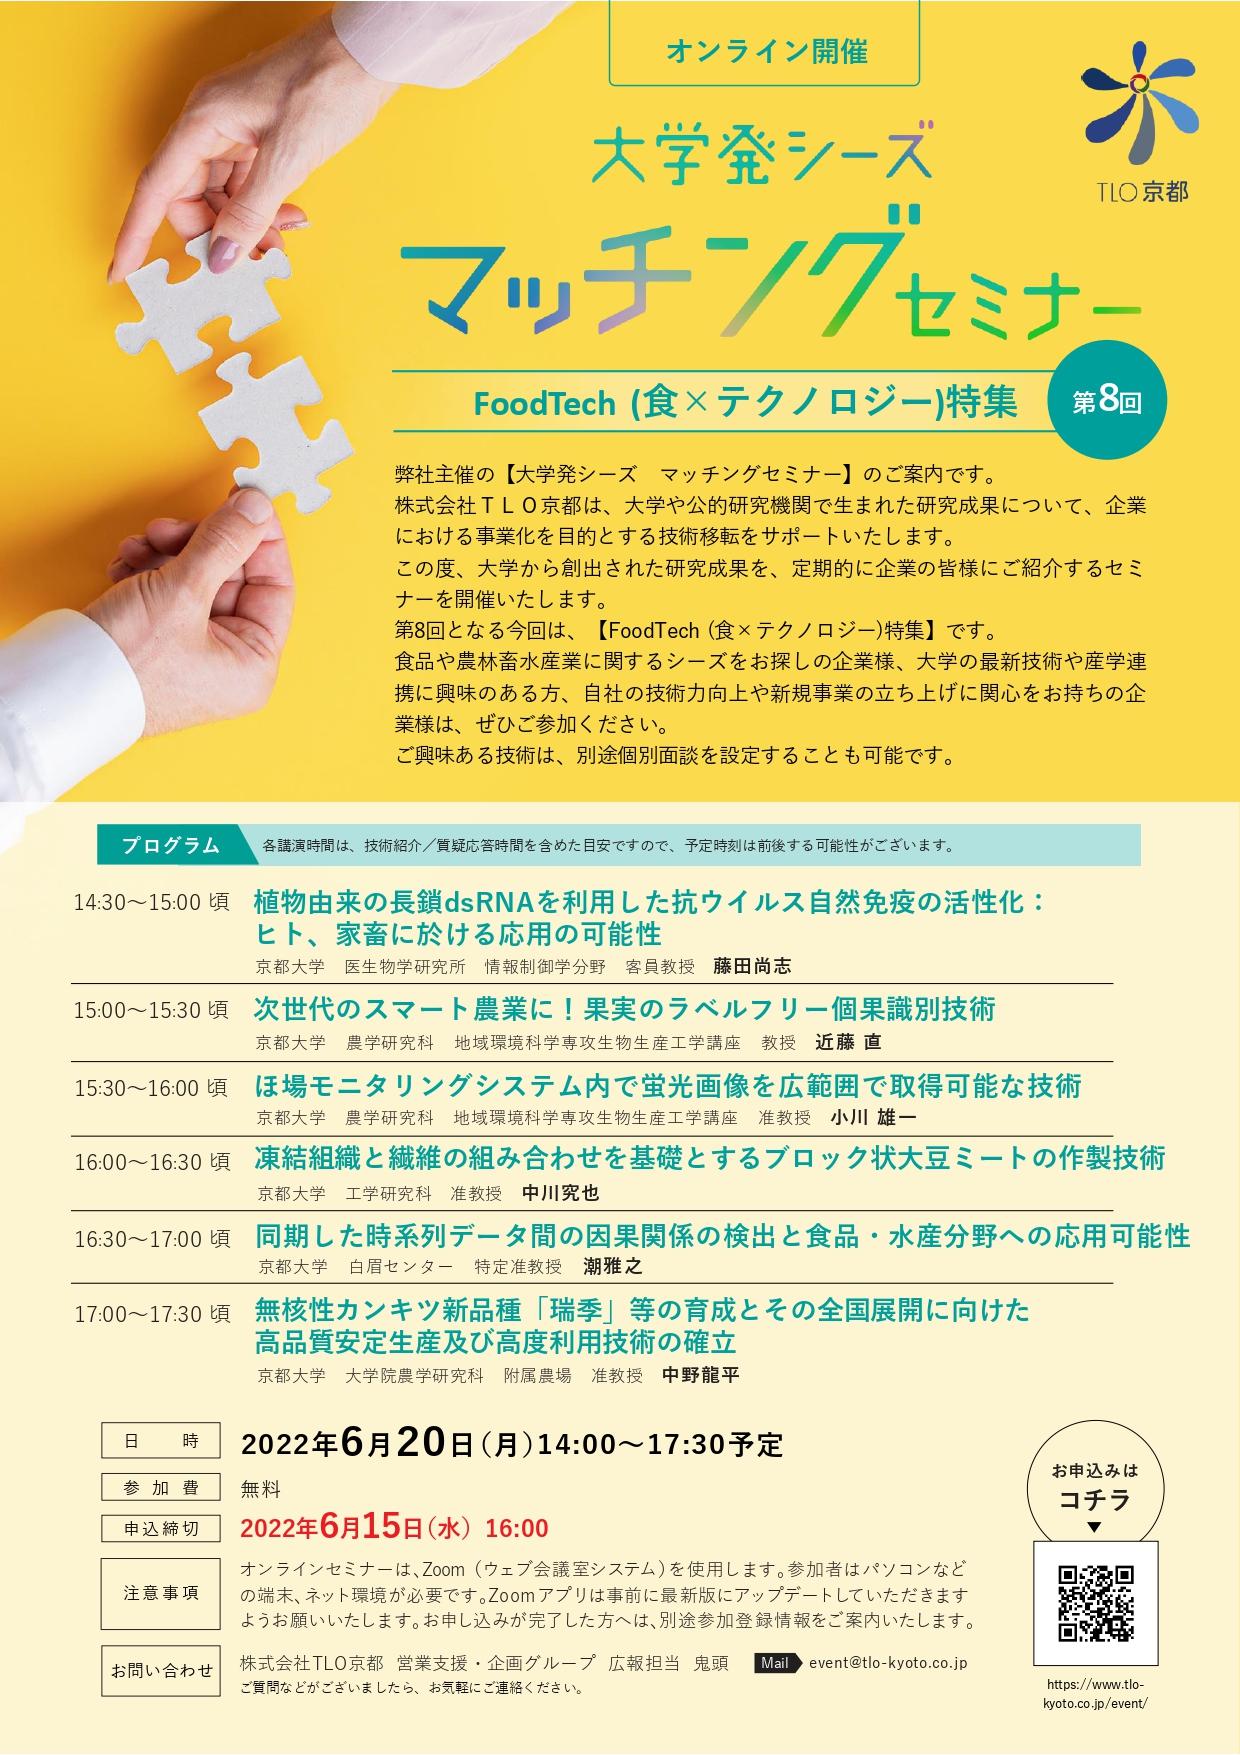 https://www.tlo-kyoto.co.jp/event/images/FoodTech.jpg